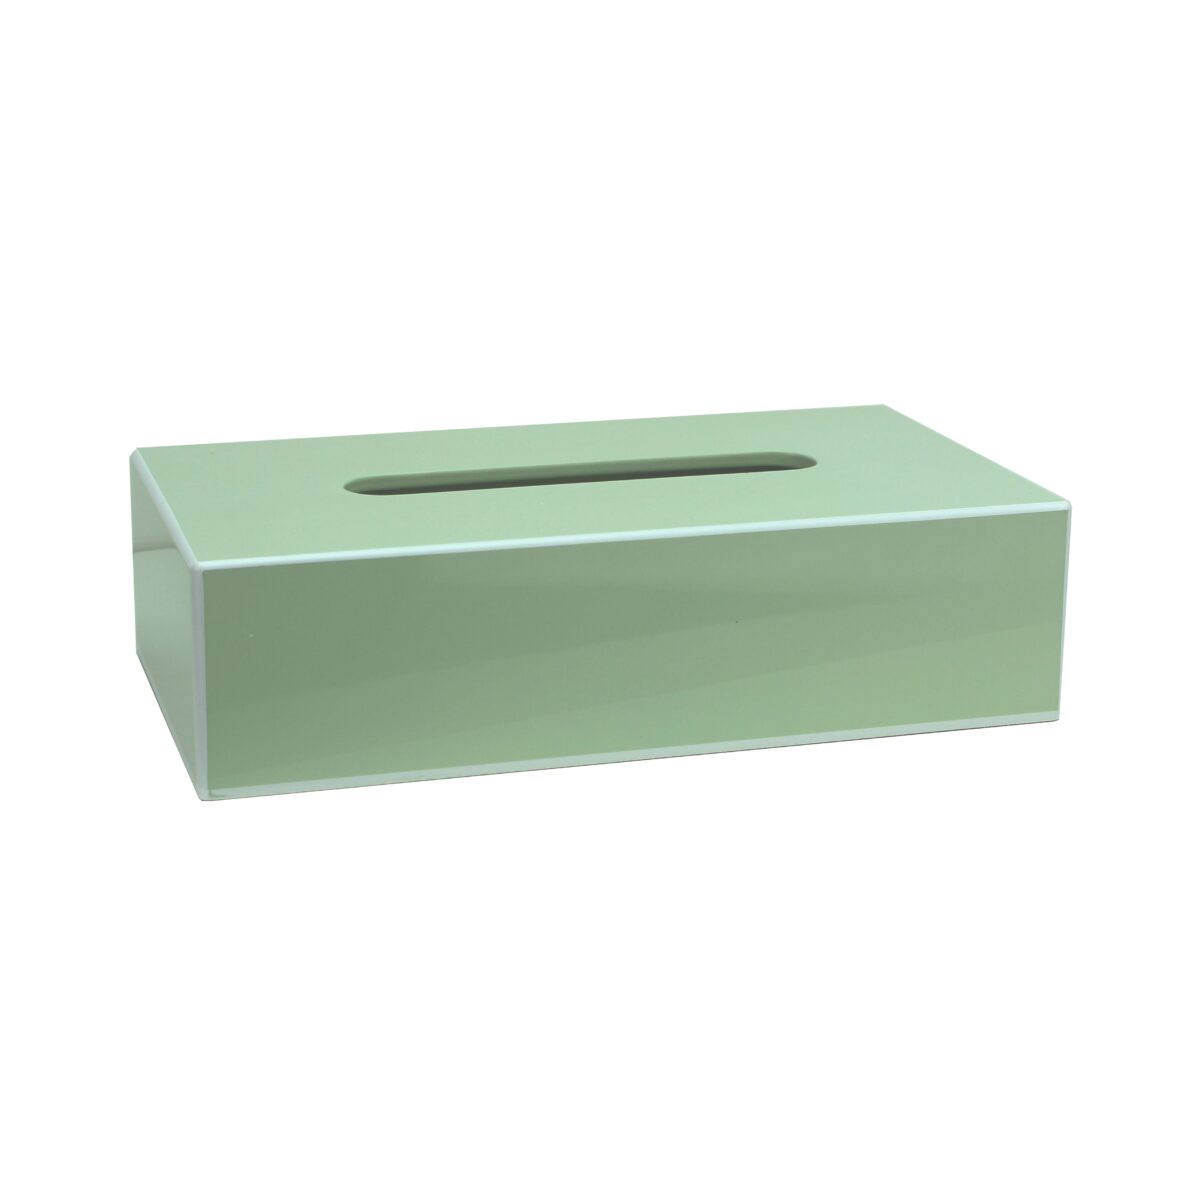 Ideal caja rectangular para Kleenex , de madera lacada en color verde .